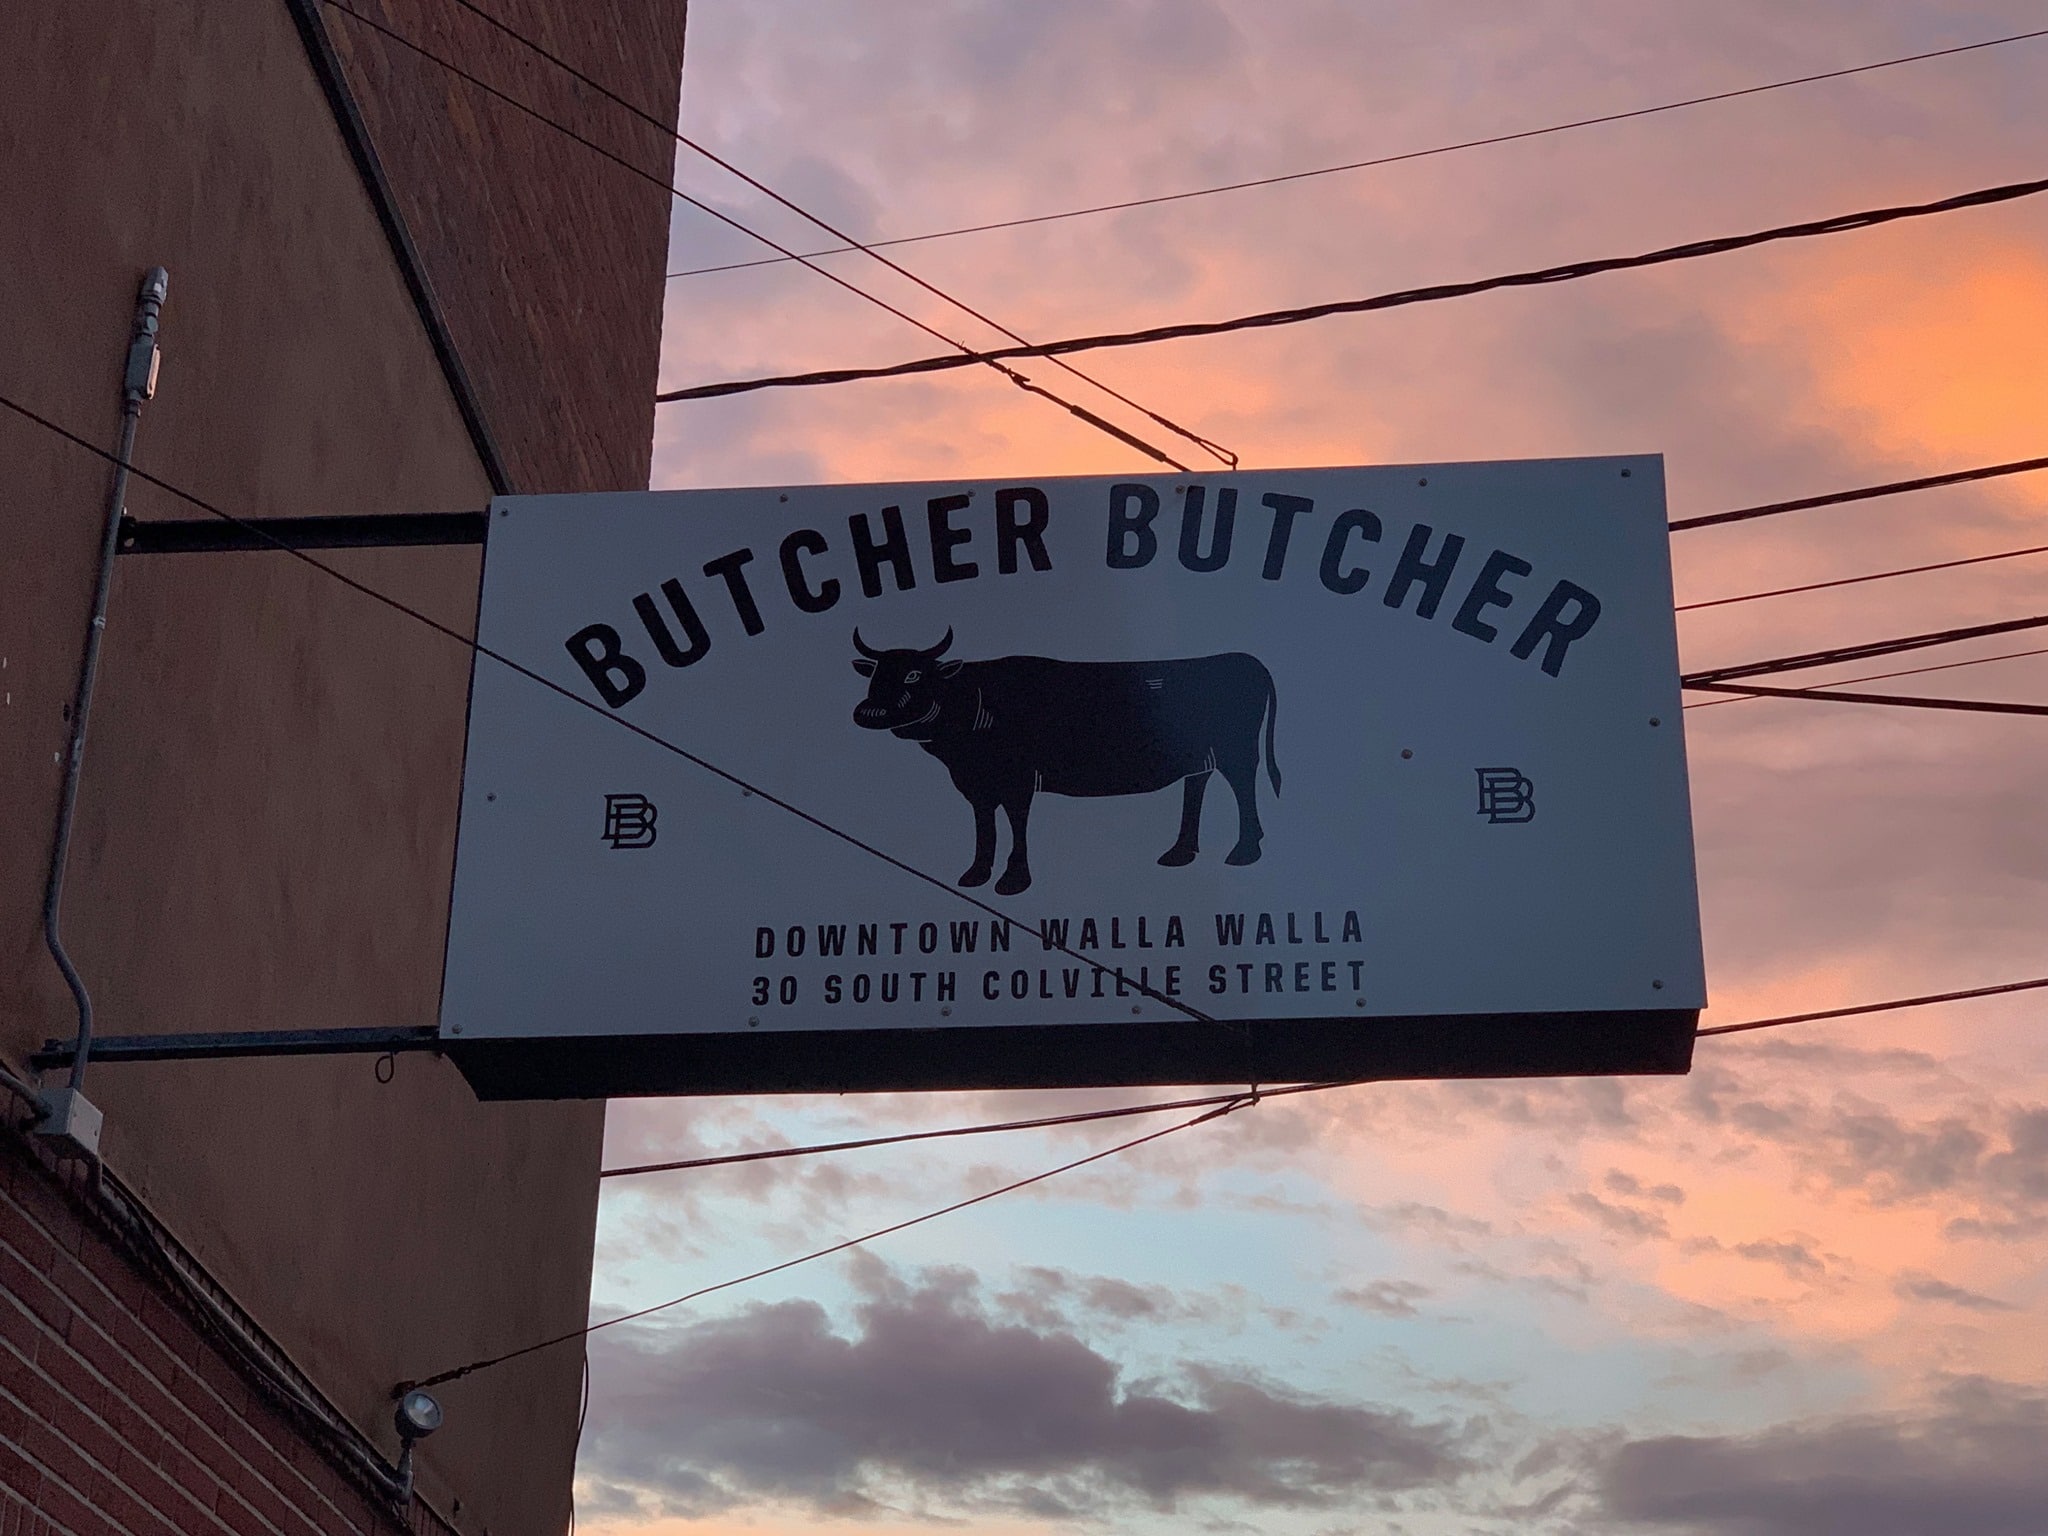 Butcher Butcher